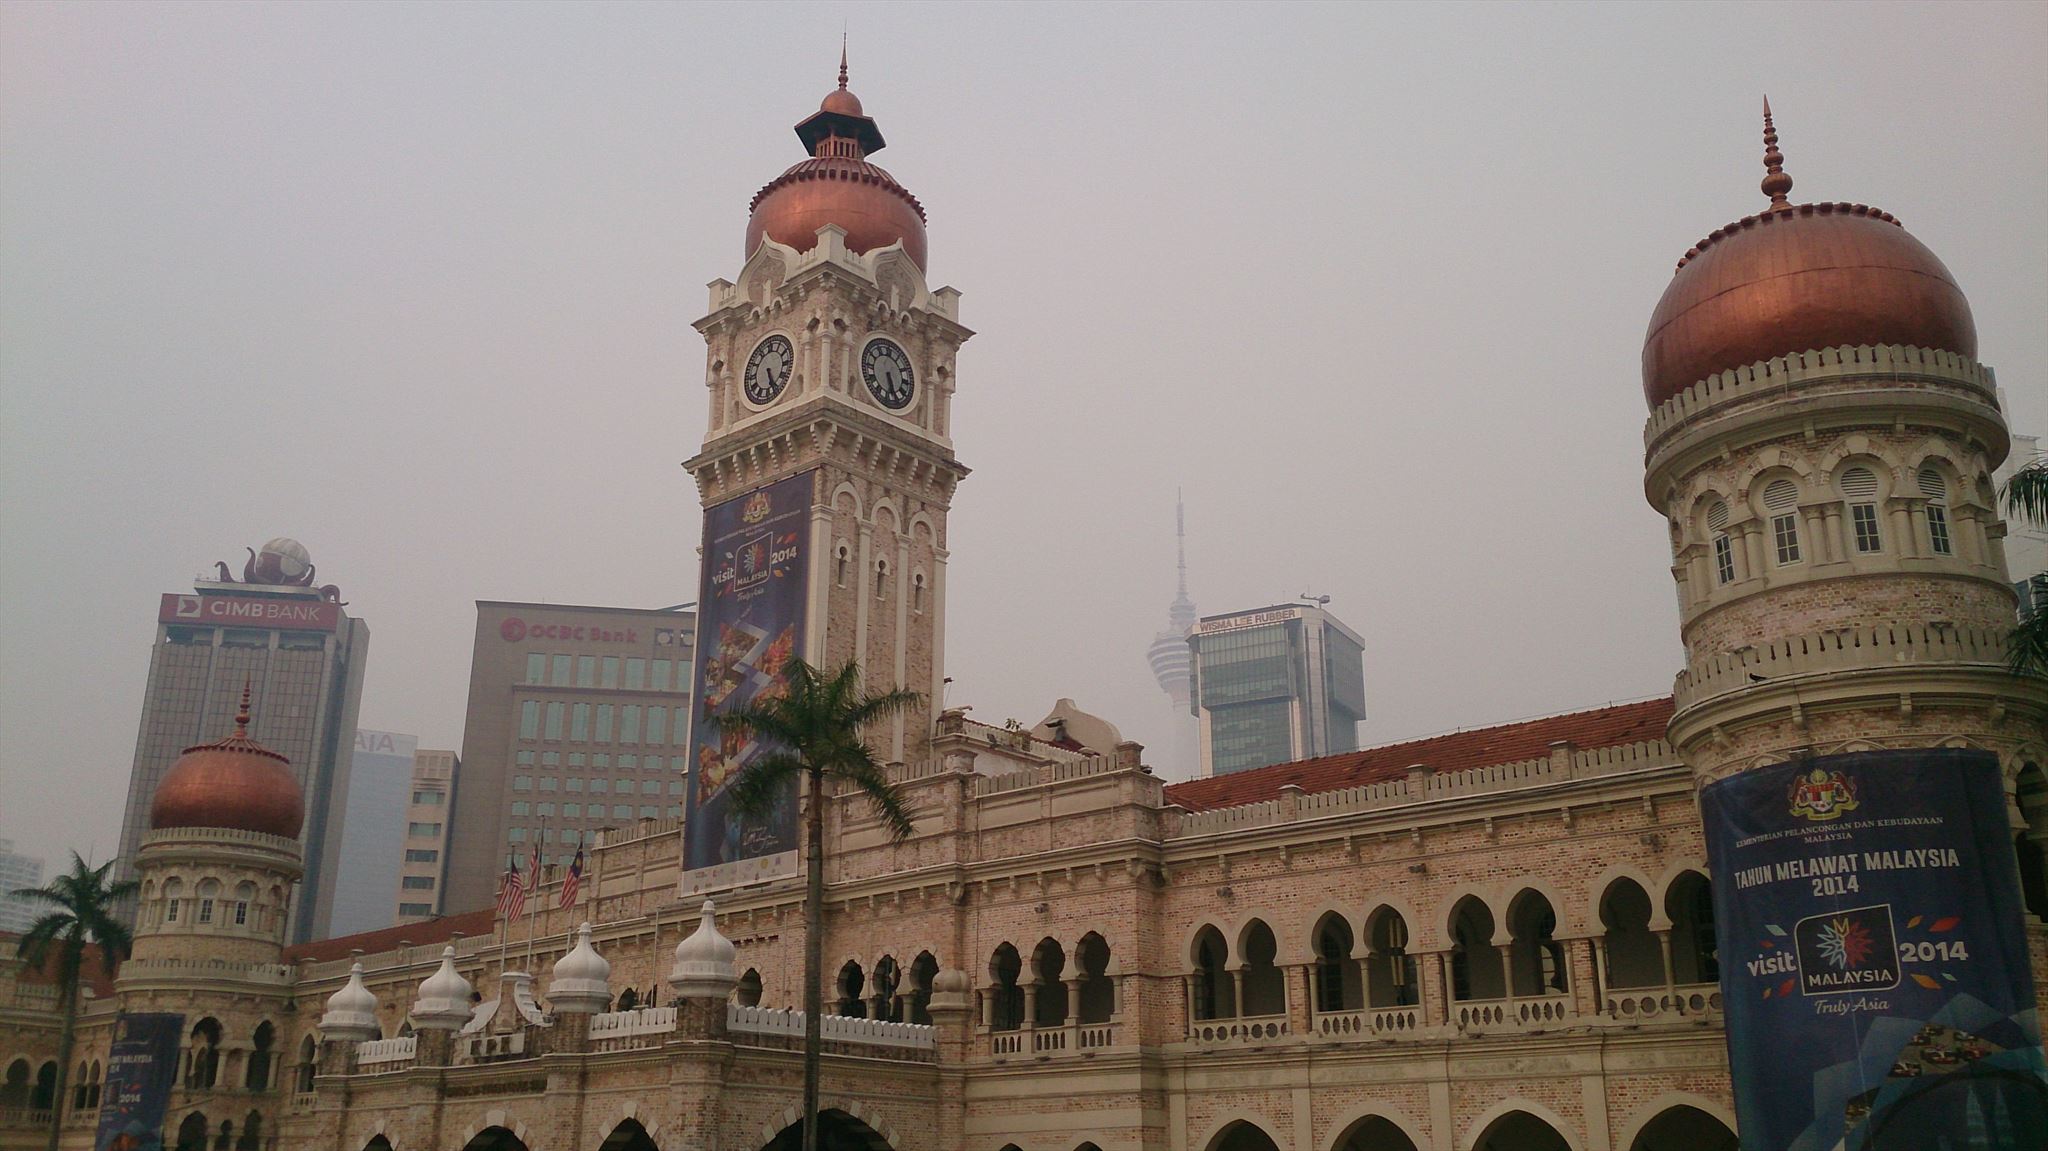 The Sultan Abdul Ahmad Shah Building